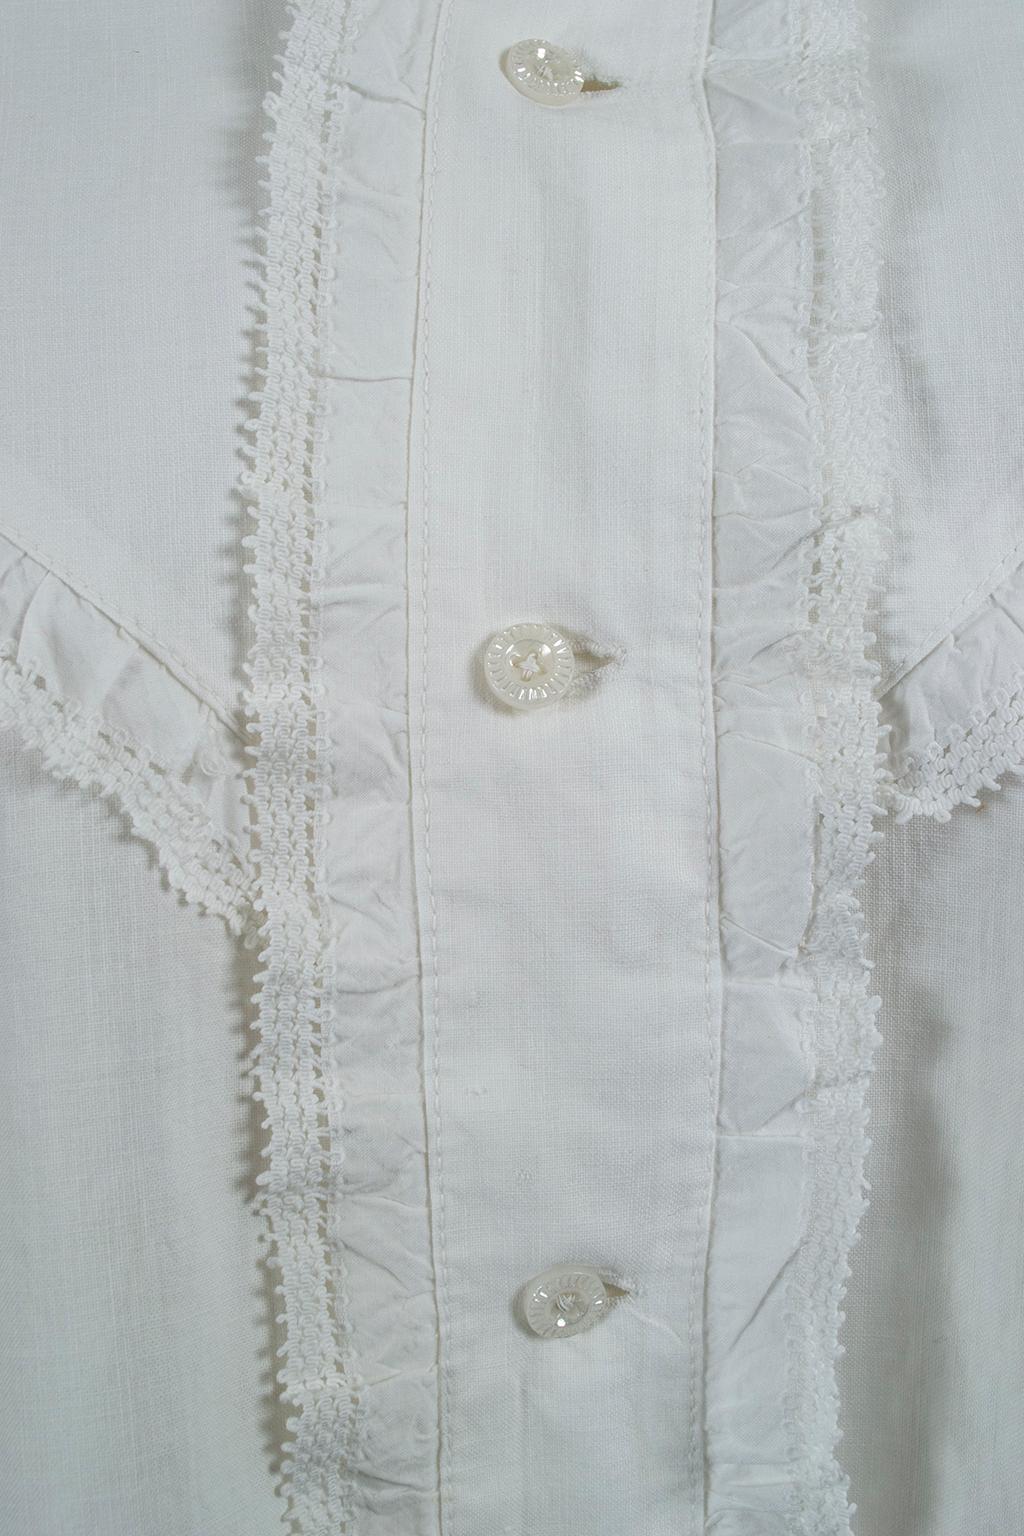 Original Civil War White Western Prairie Homesteader Shirtwaist Dress -XS, 1860s For Sale 3